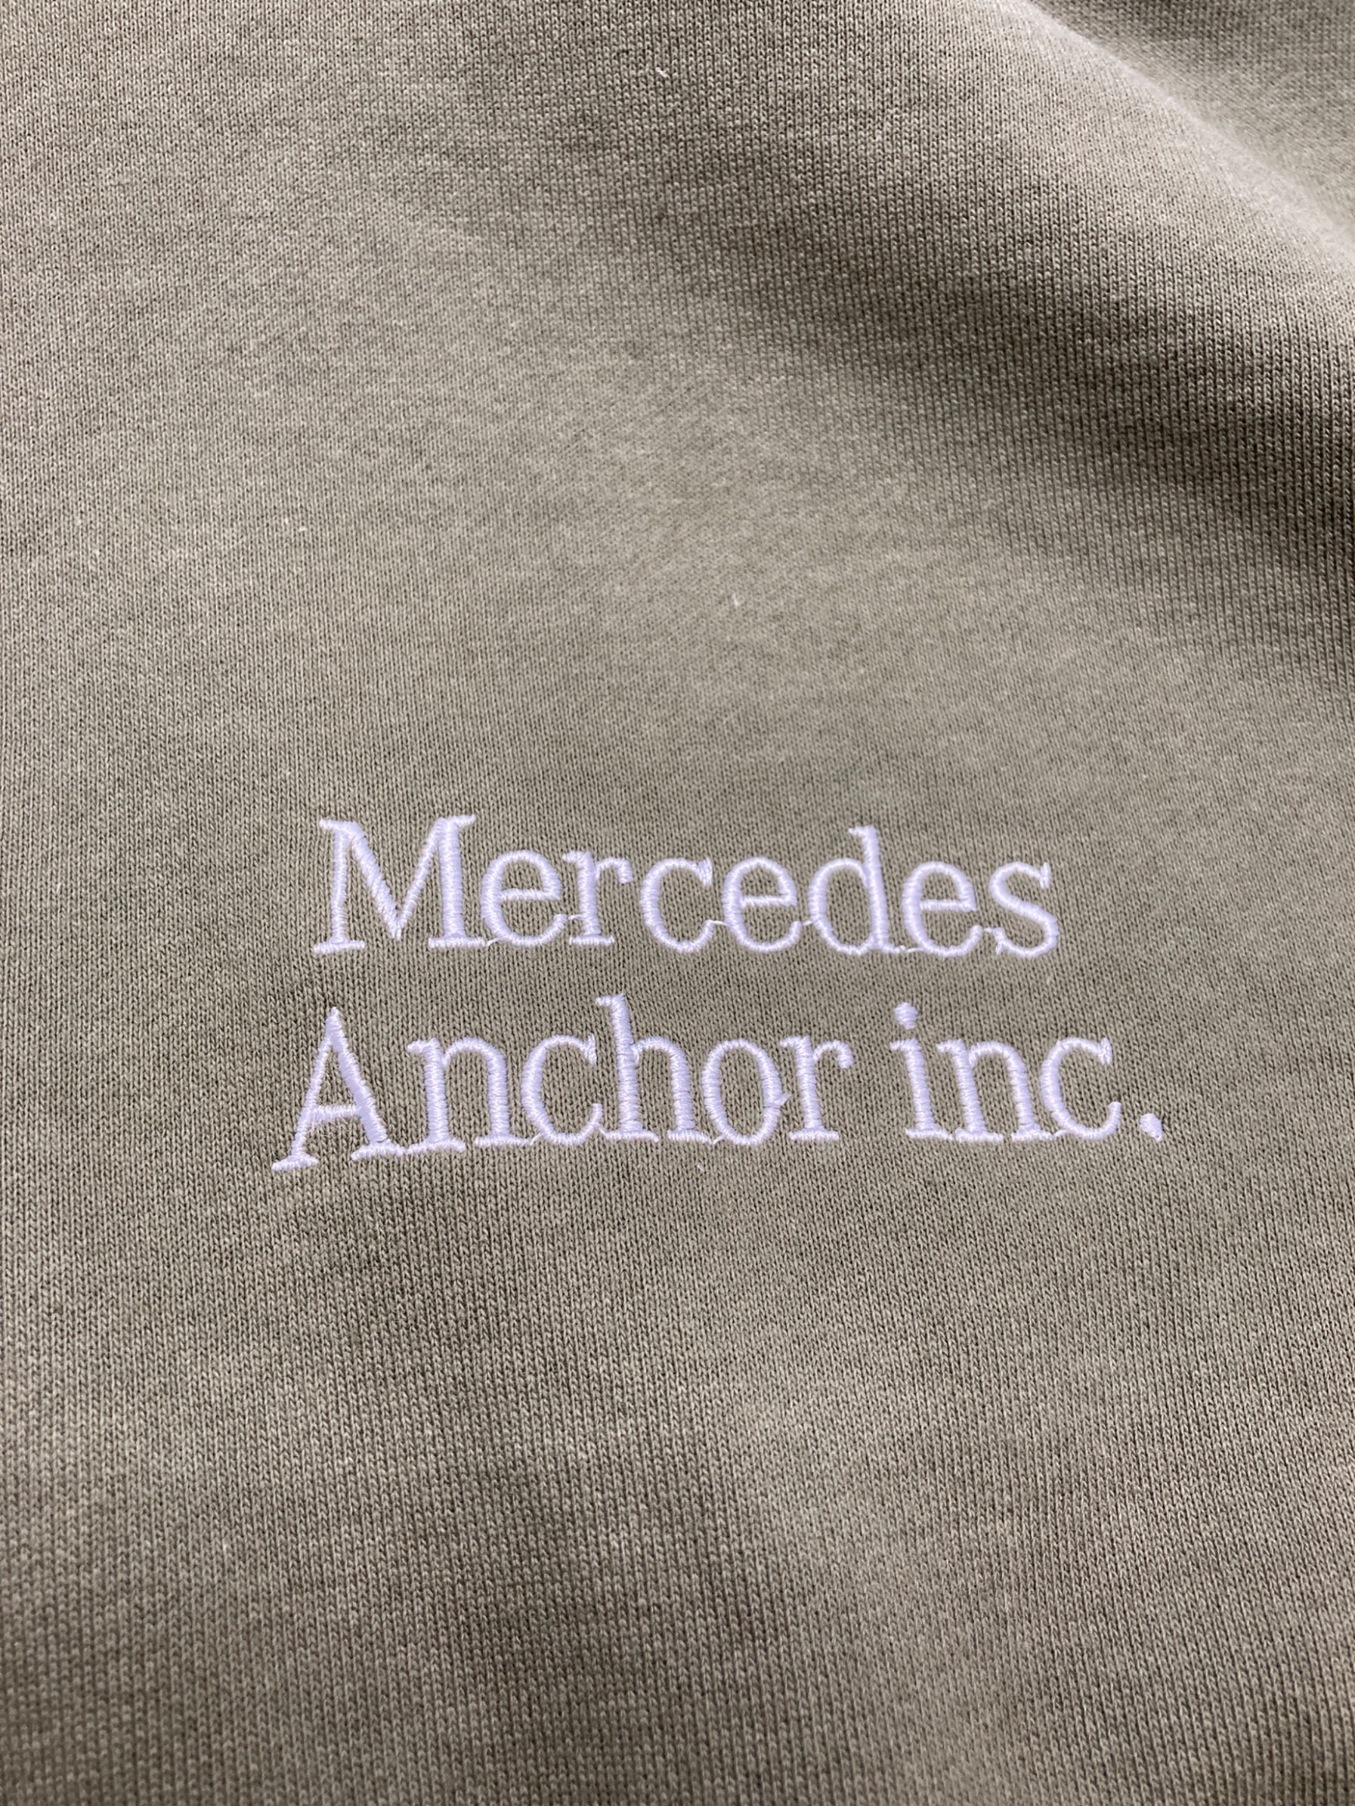 Mersedes Anchor Inc. Hoodieパーカー - パーカー